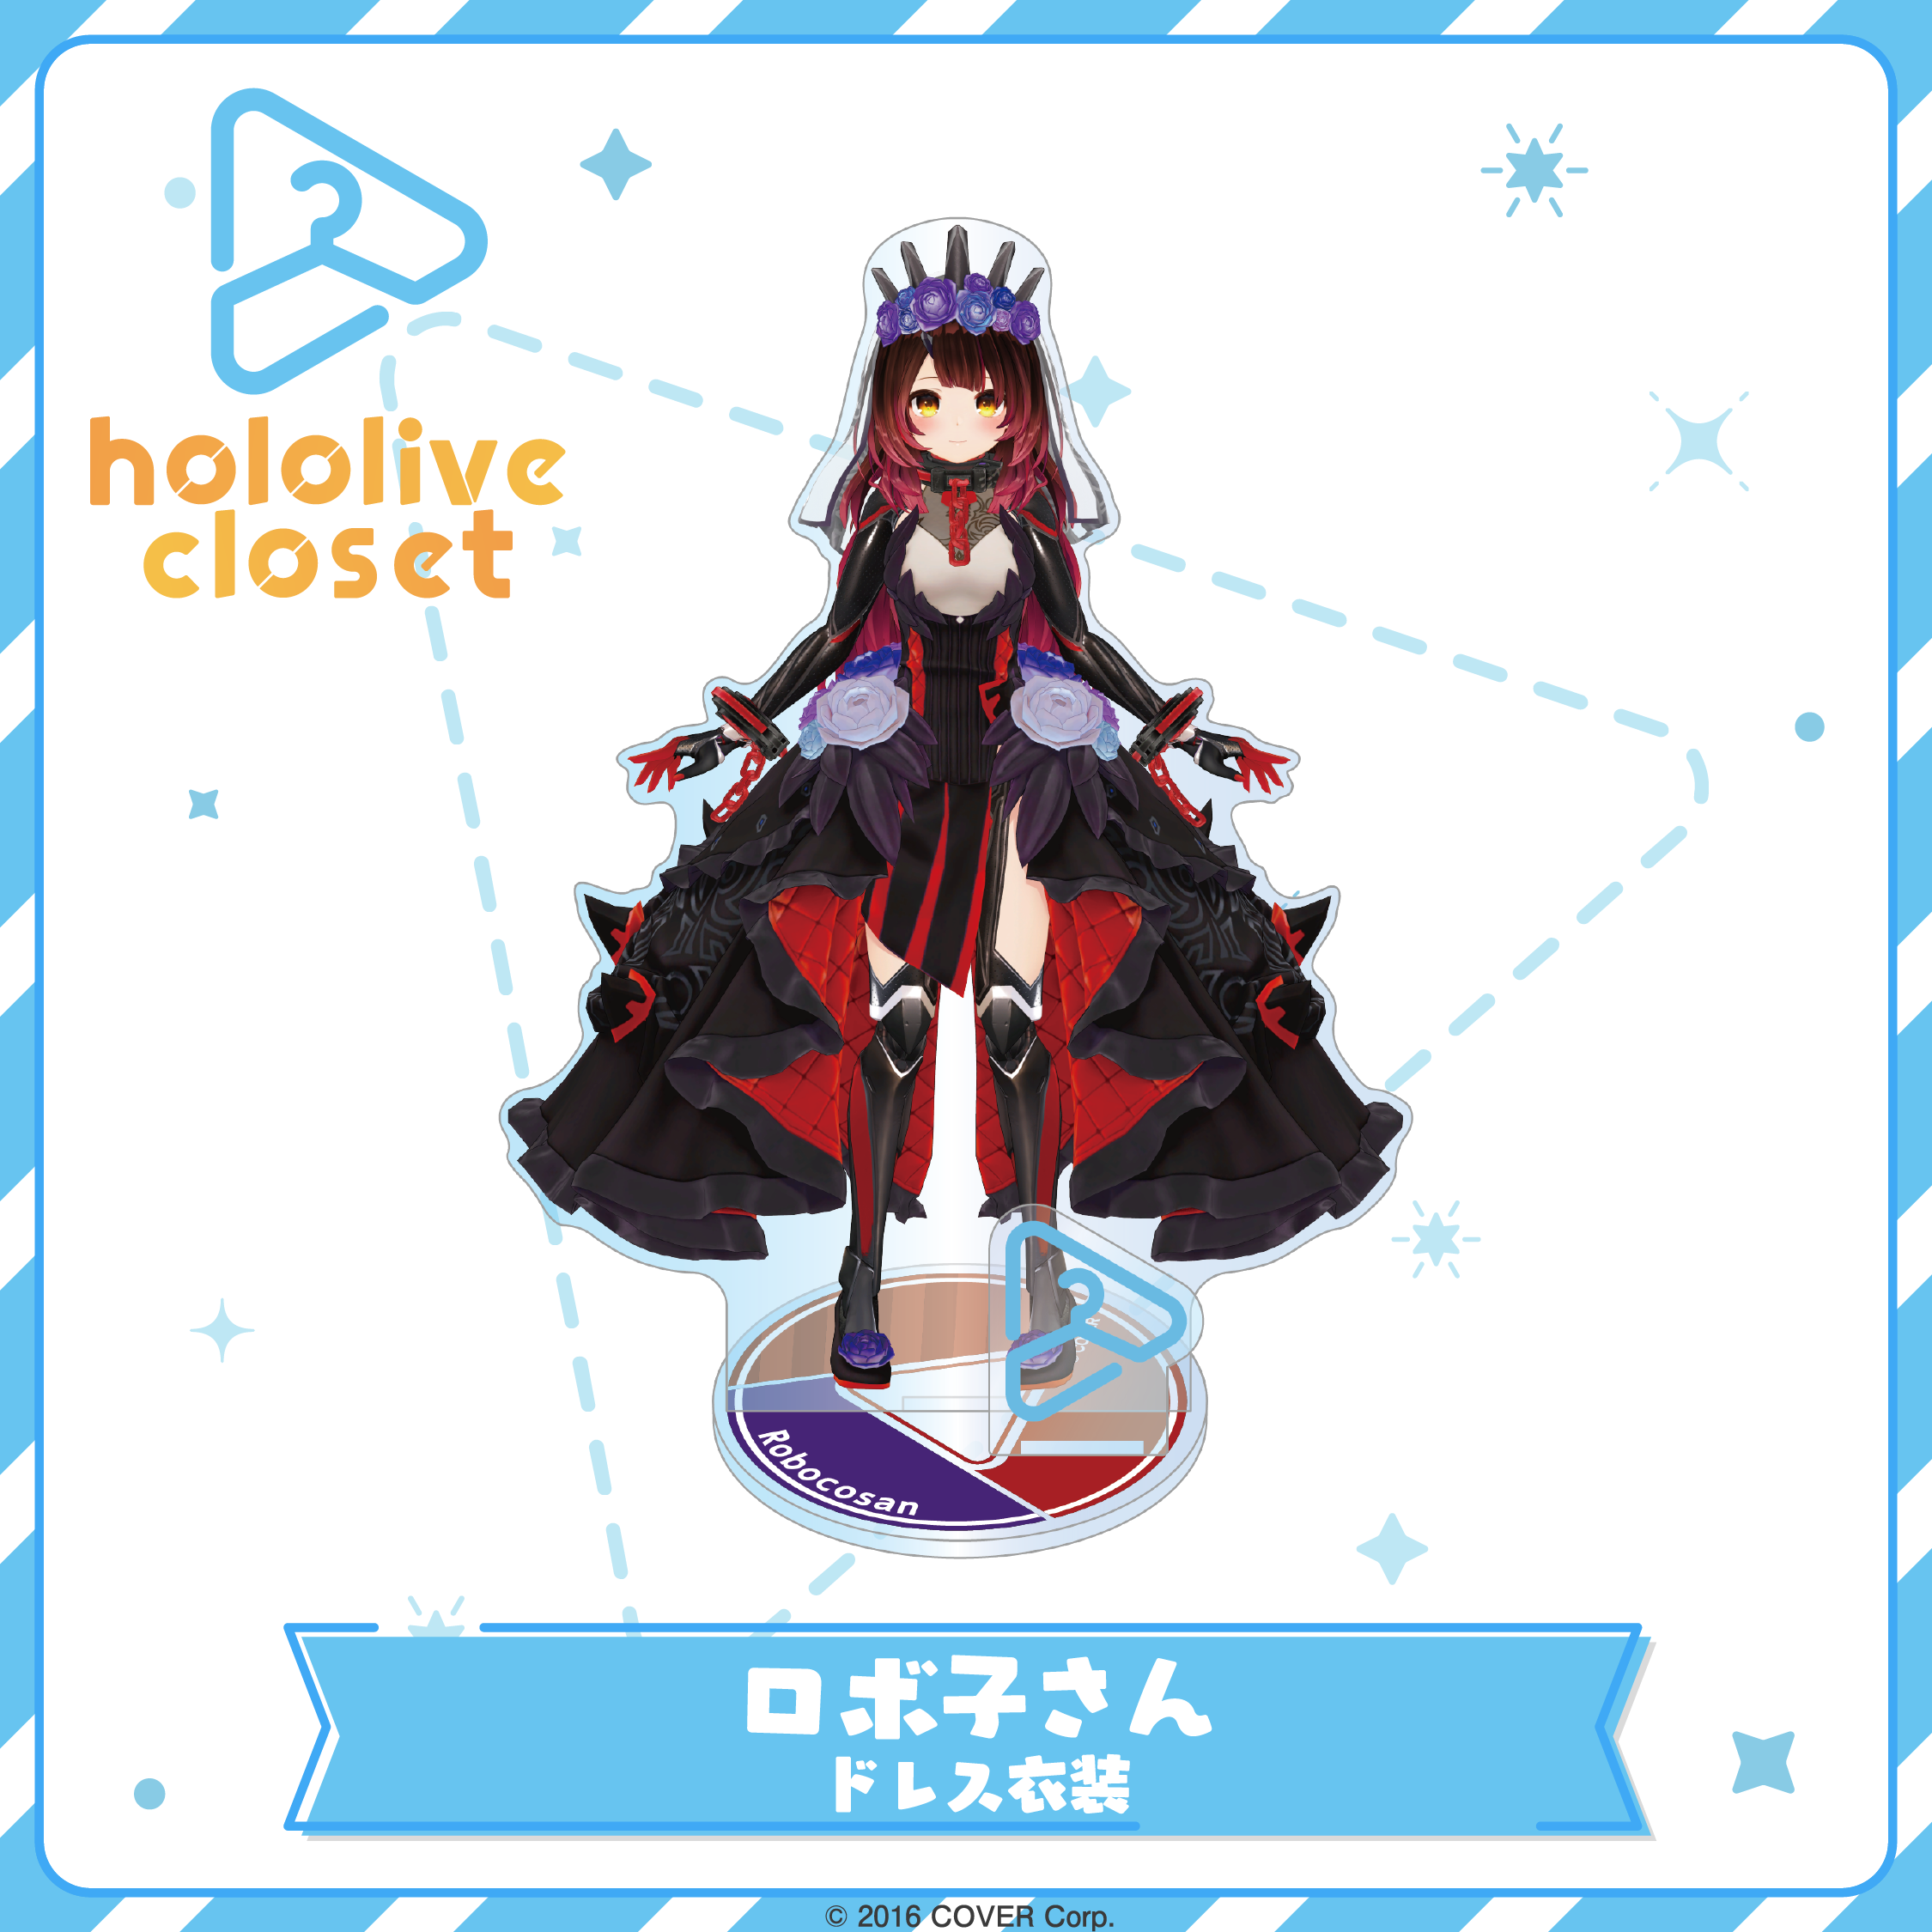 hololive closet ロボ子さん ドレス衣装